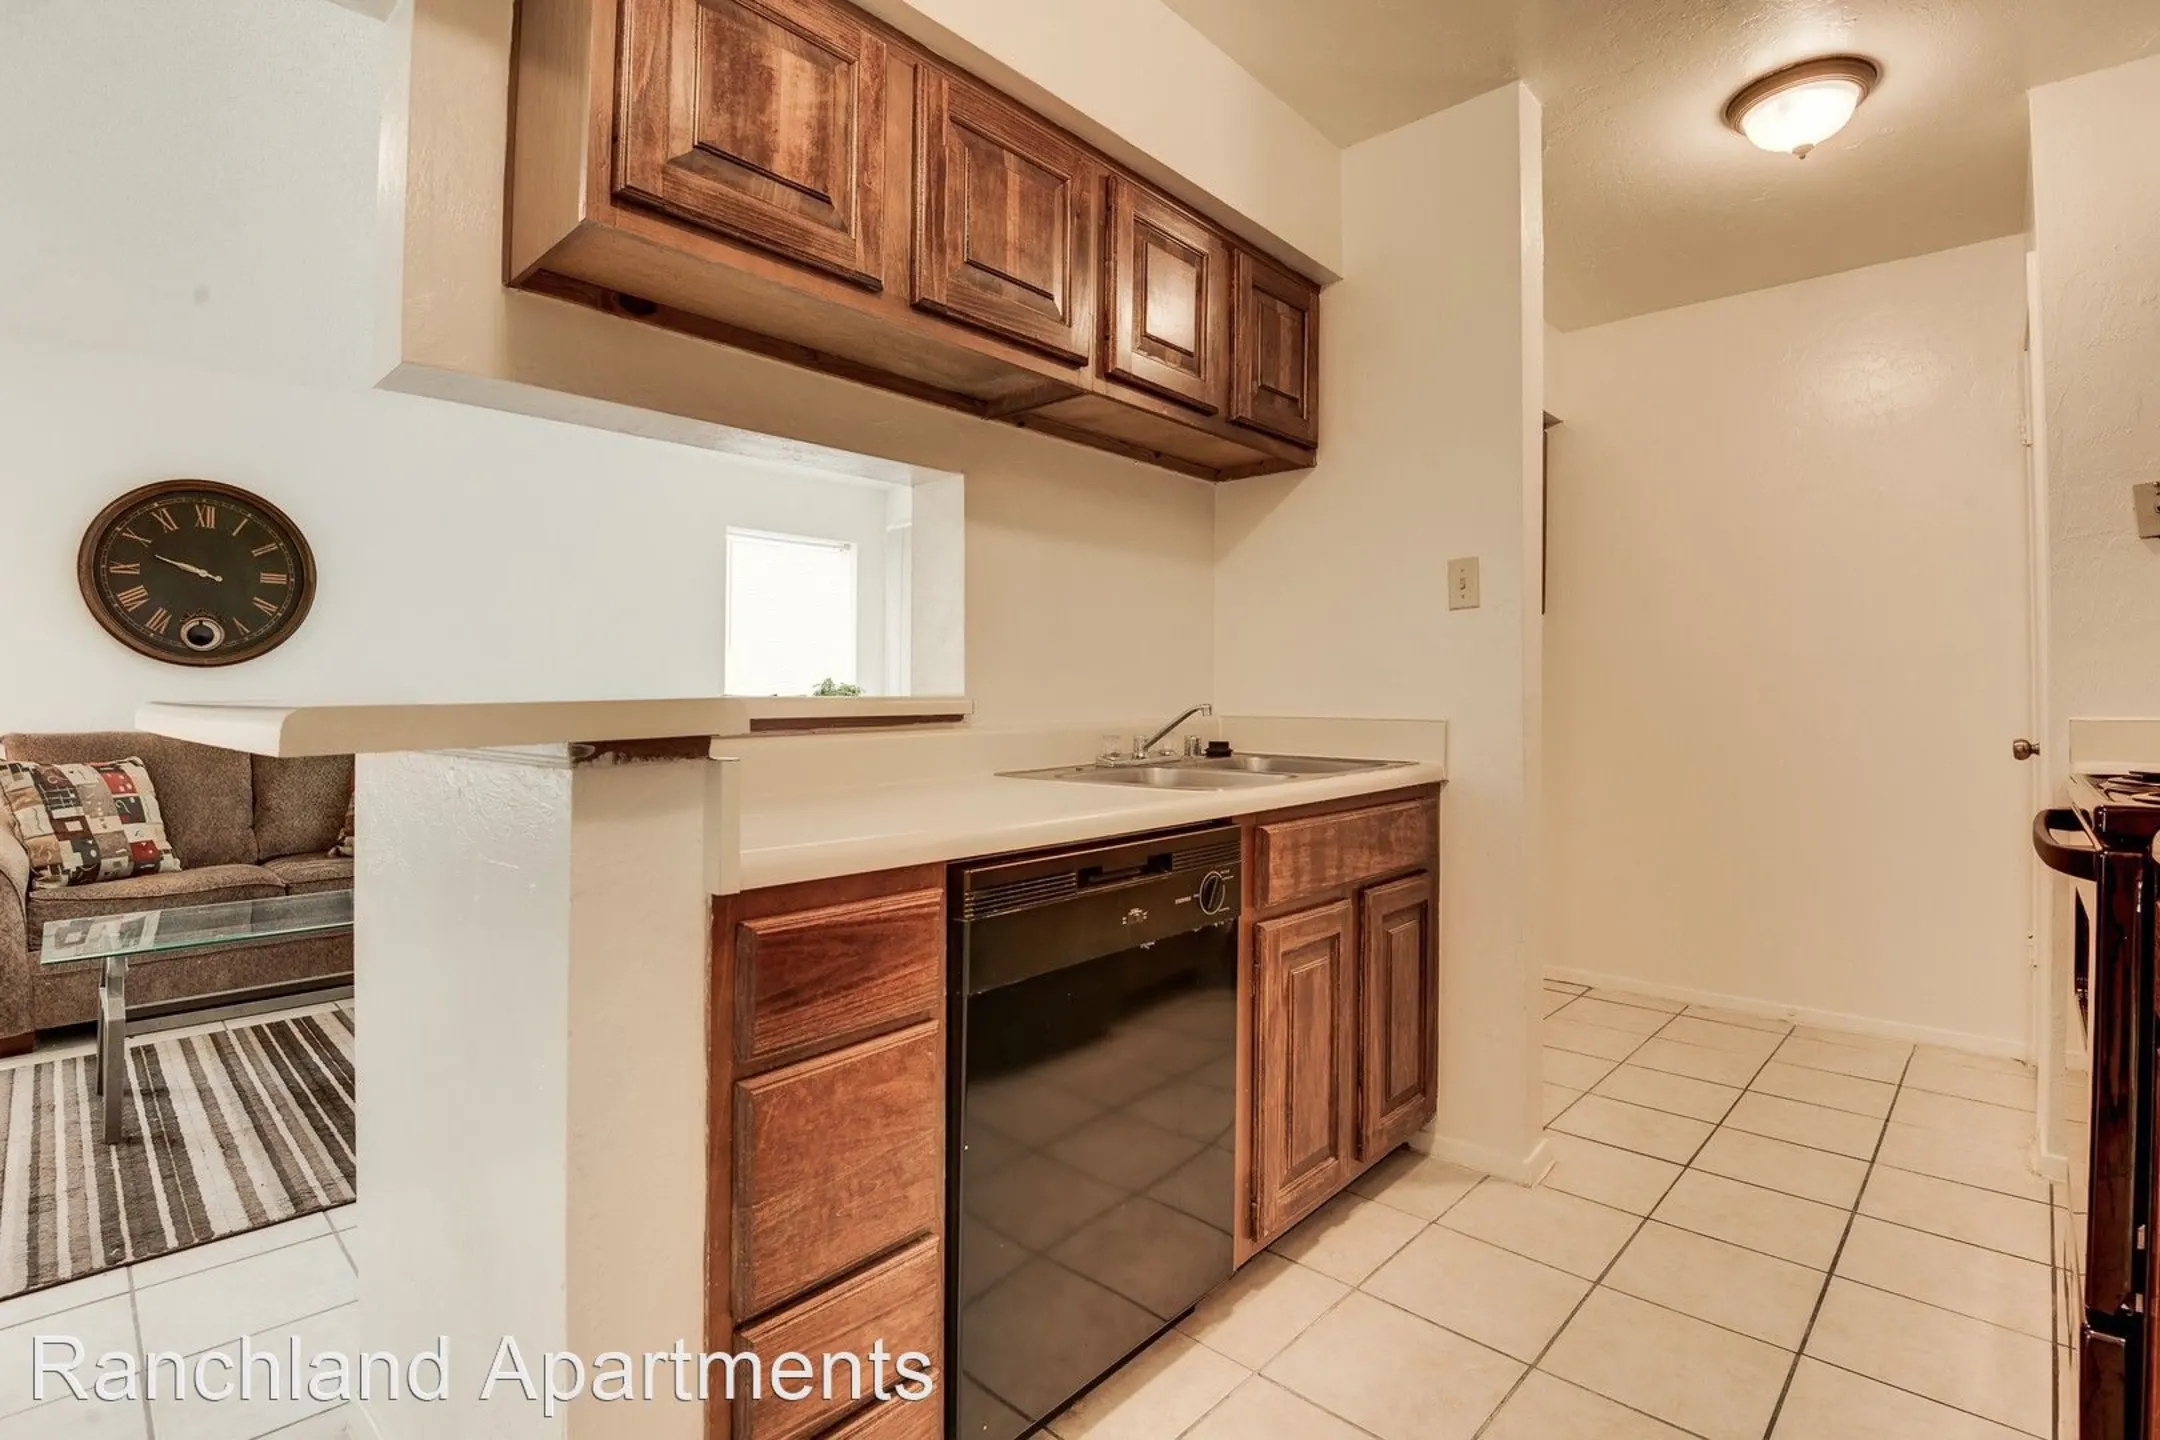 Kitchen - Ranchland Apartments - Midland, TX